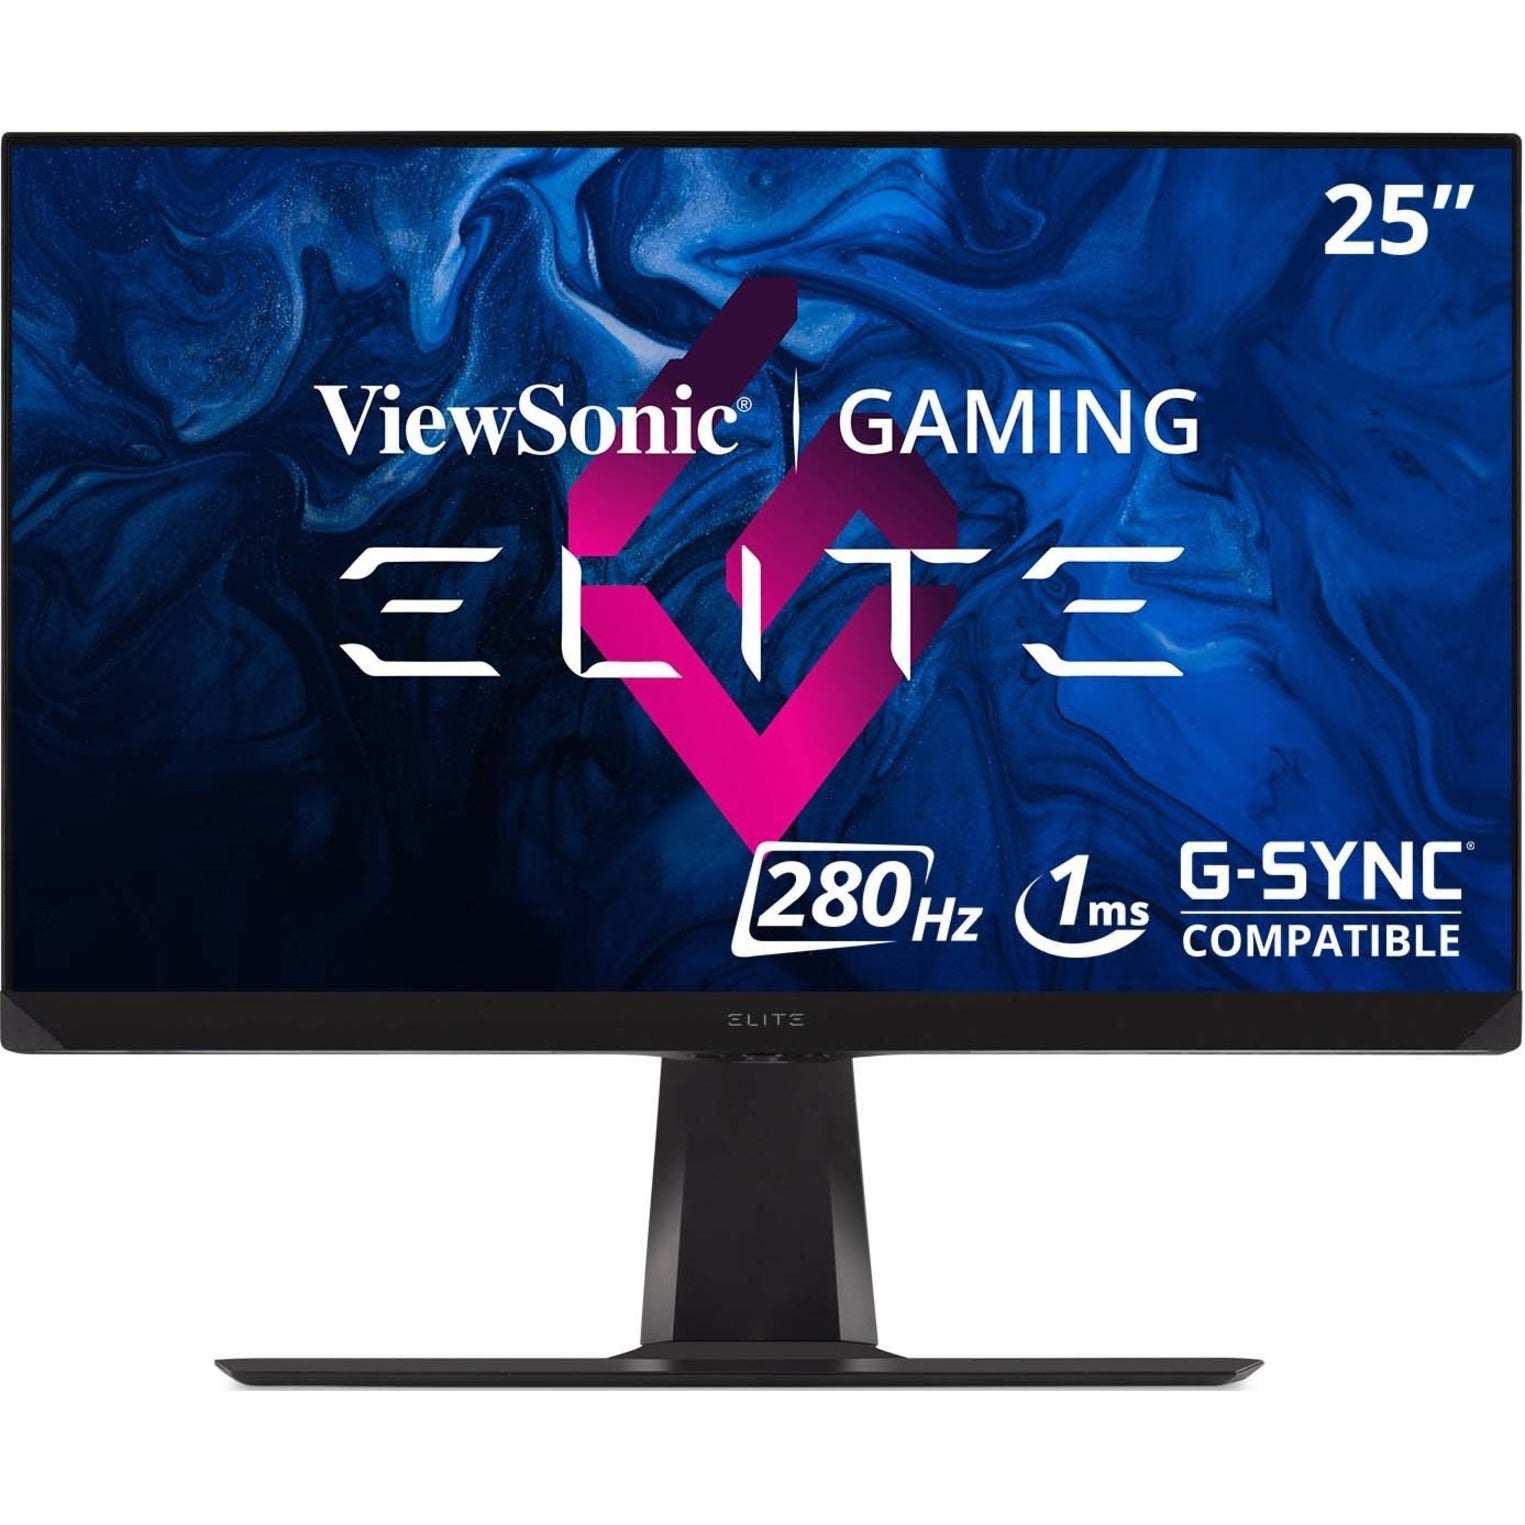 ViewSonic XG250 Elite Gaming Monitor, 25" IPS, 240Hz, 1ms, NVIDIA G-Sync Compatible, Advanced Ergonomics, RGB Lighting